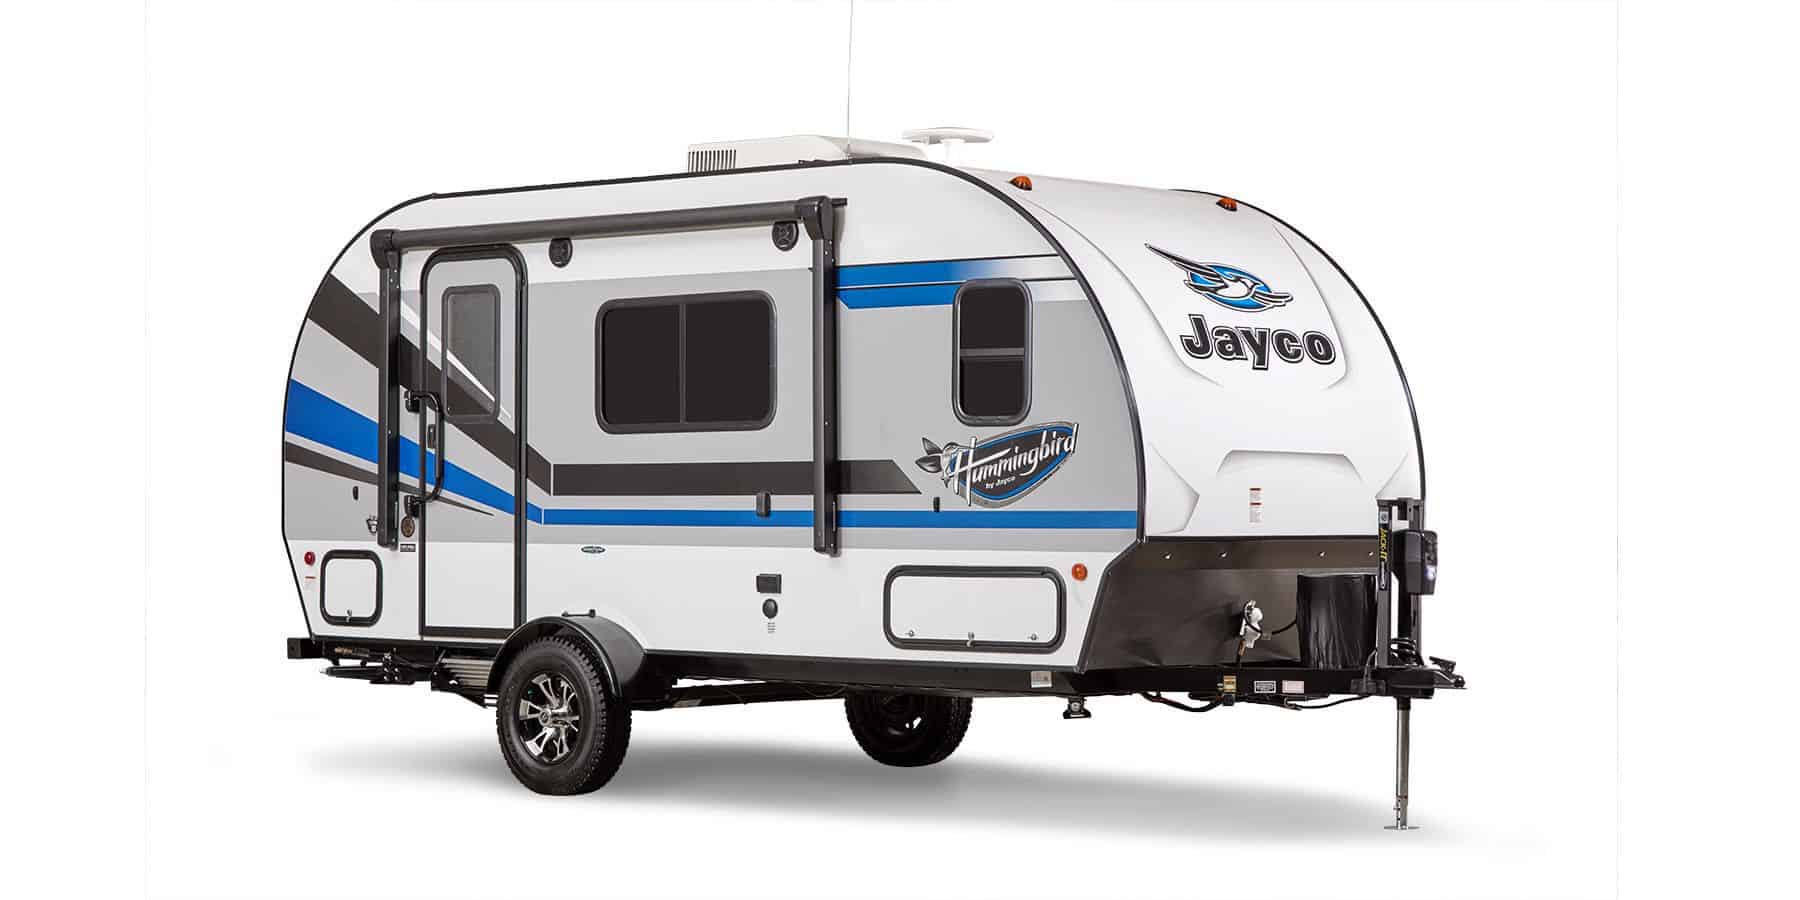 jayco travel trailers no slides